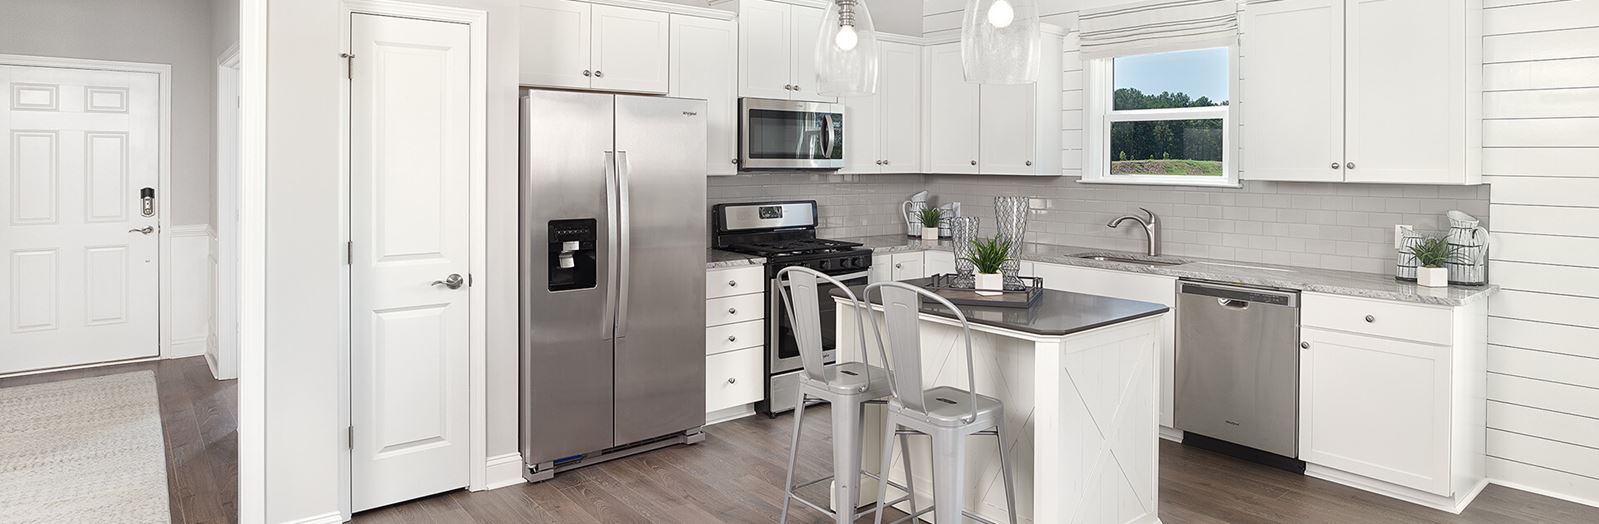 Centex model home kitchen interior - New homes in Nexton